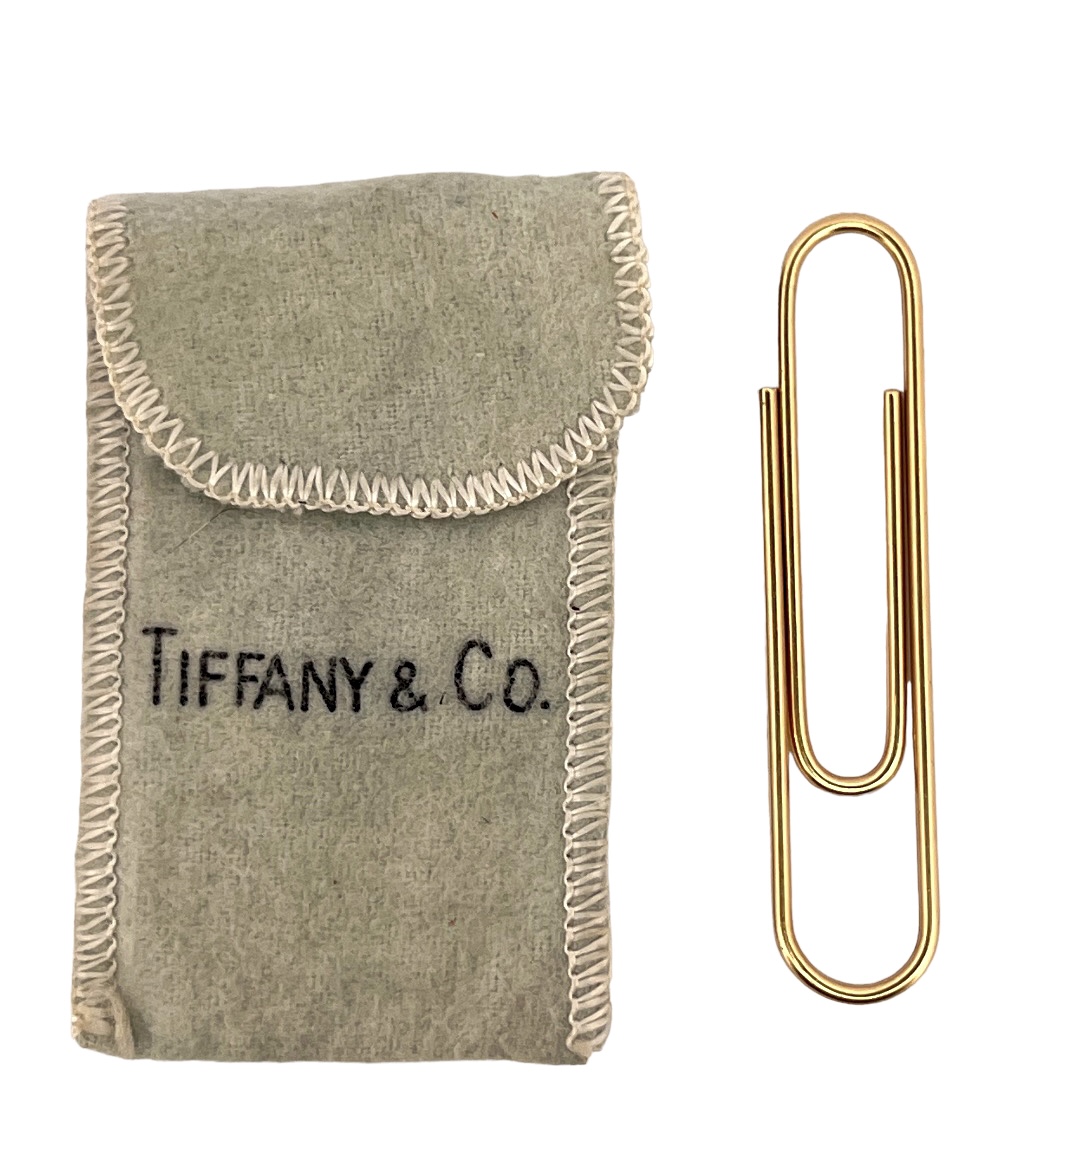 Tiffany & Co. (@tiffanyandco) • Instagram photos and videos